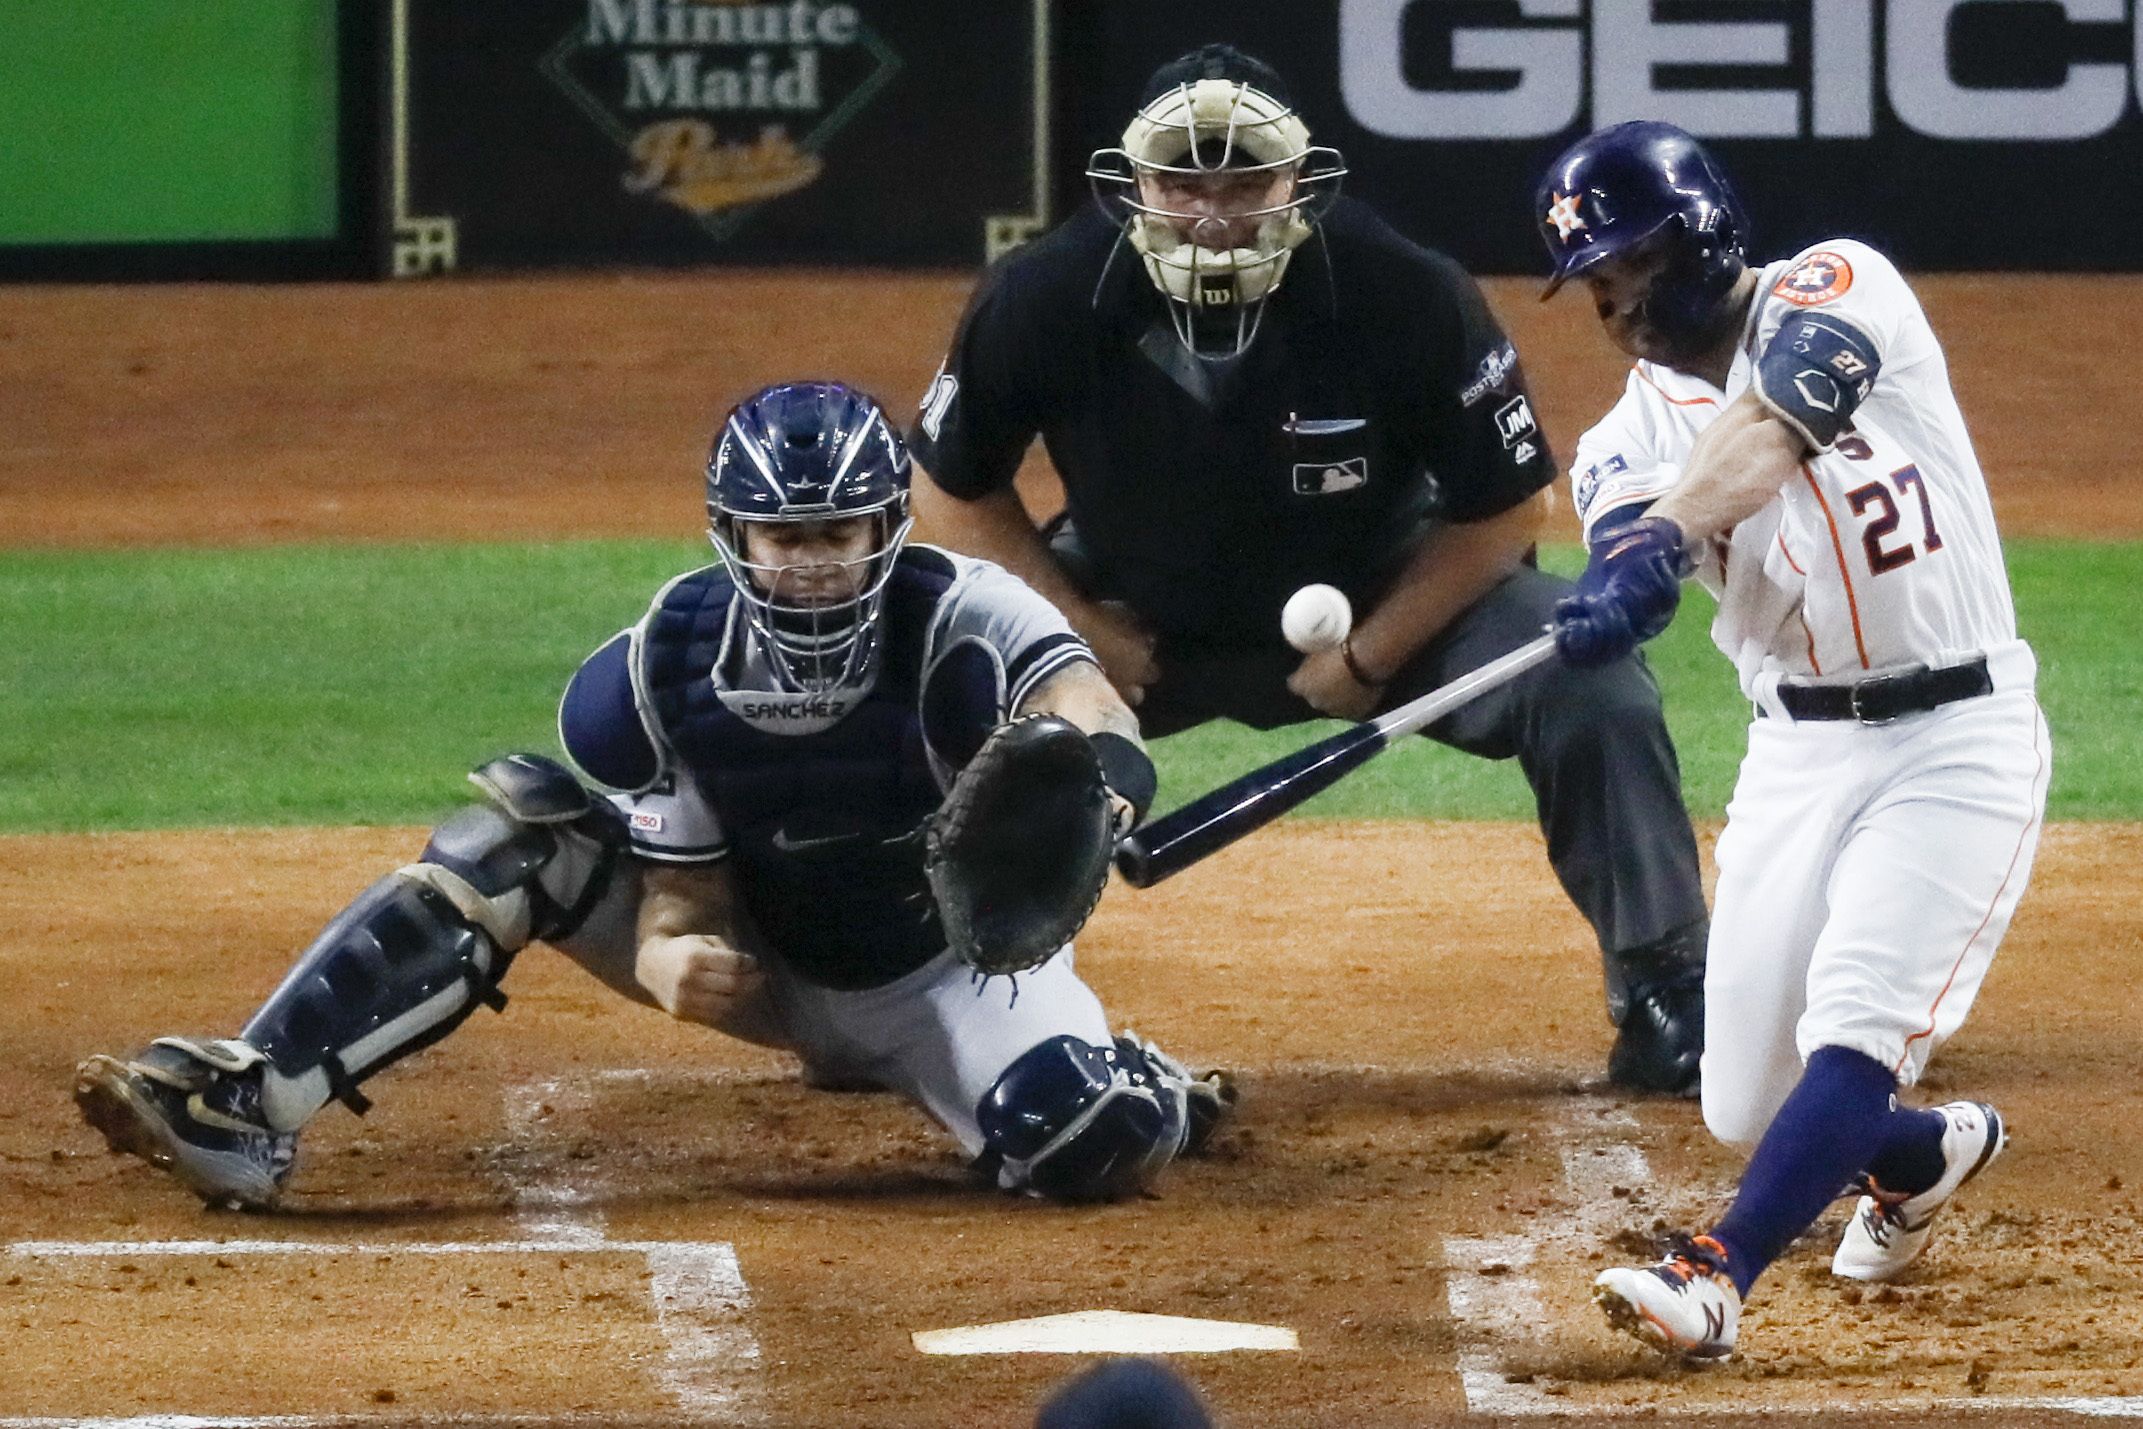 Yankees' season ends with heartbreak as Astros' Jose Altuve hits walk-off  home run in ALCS Game 6 